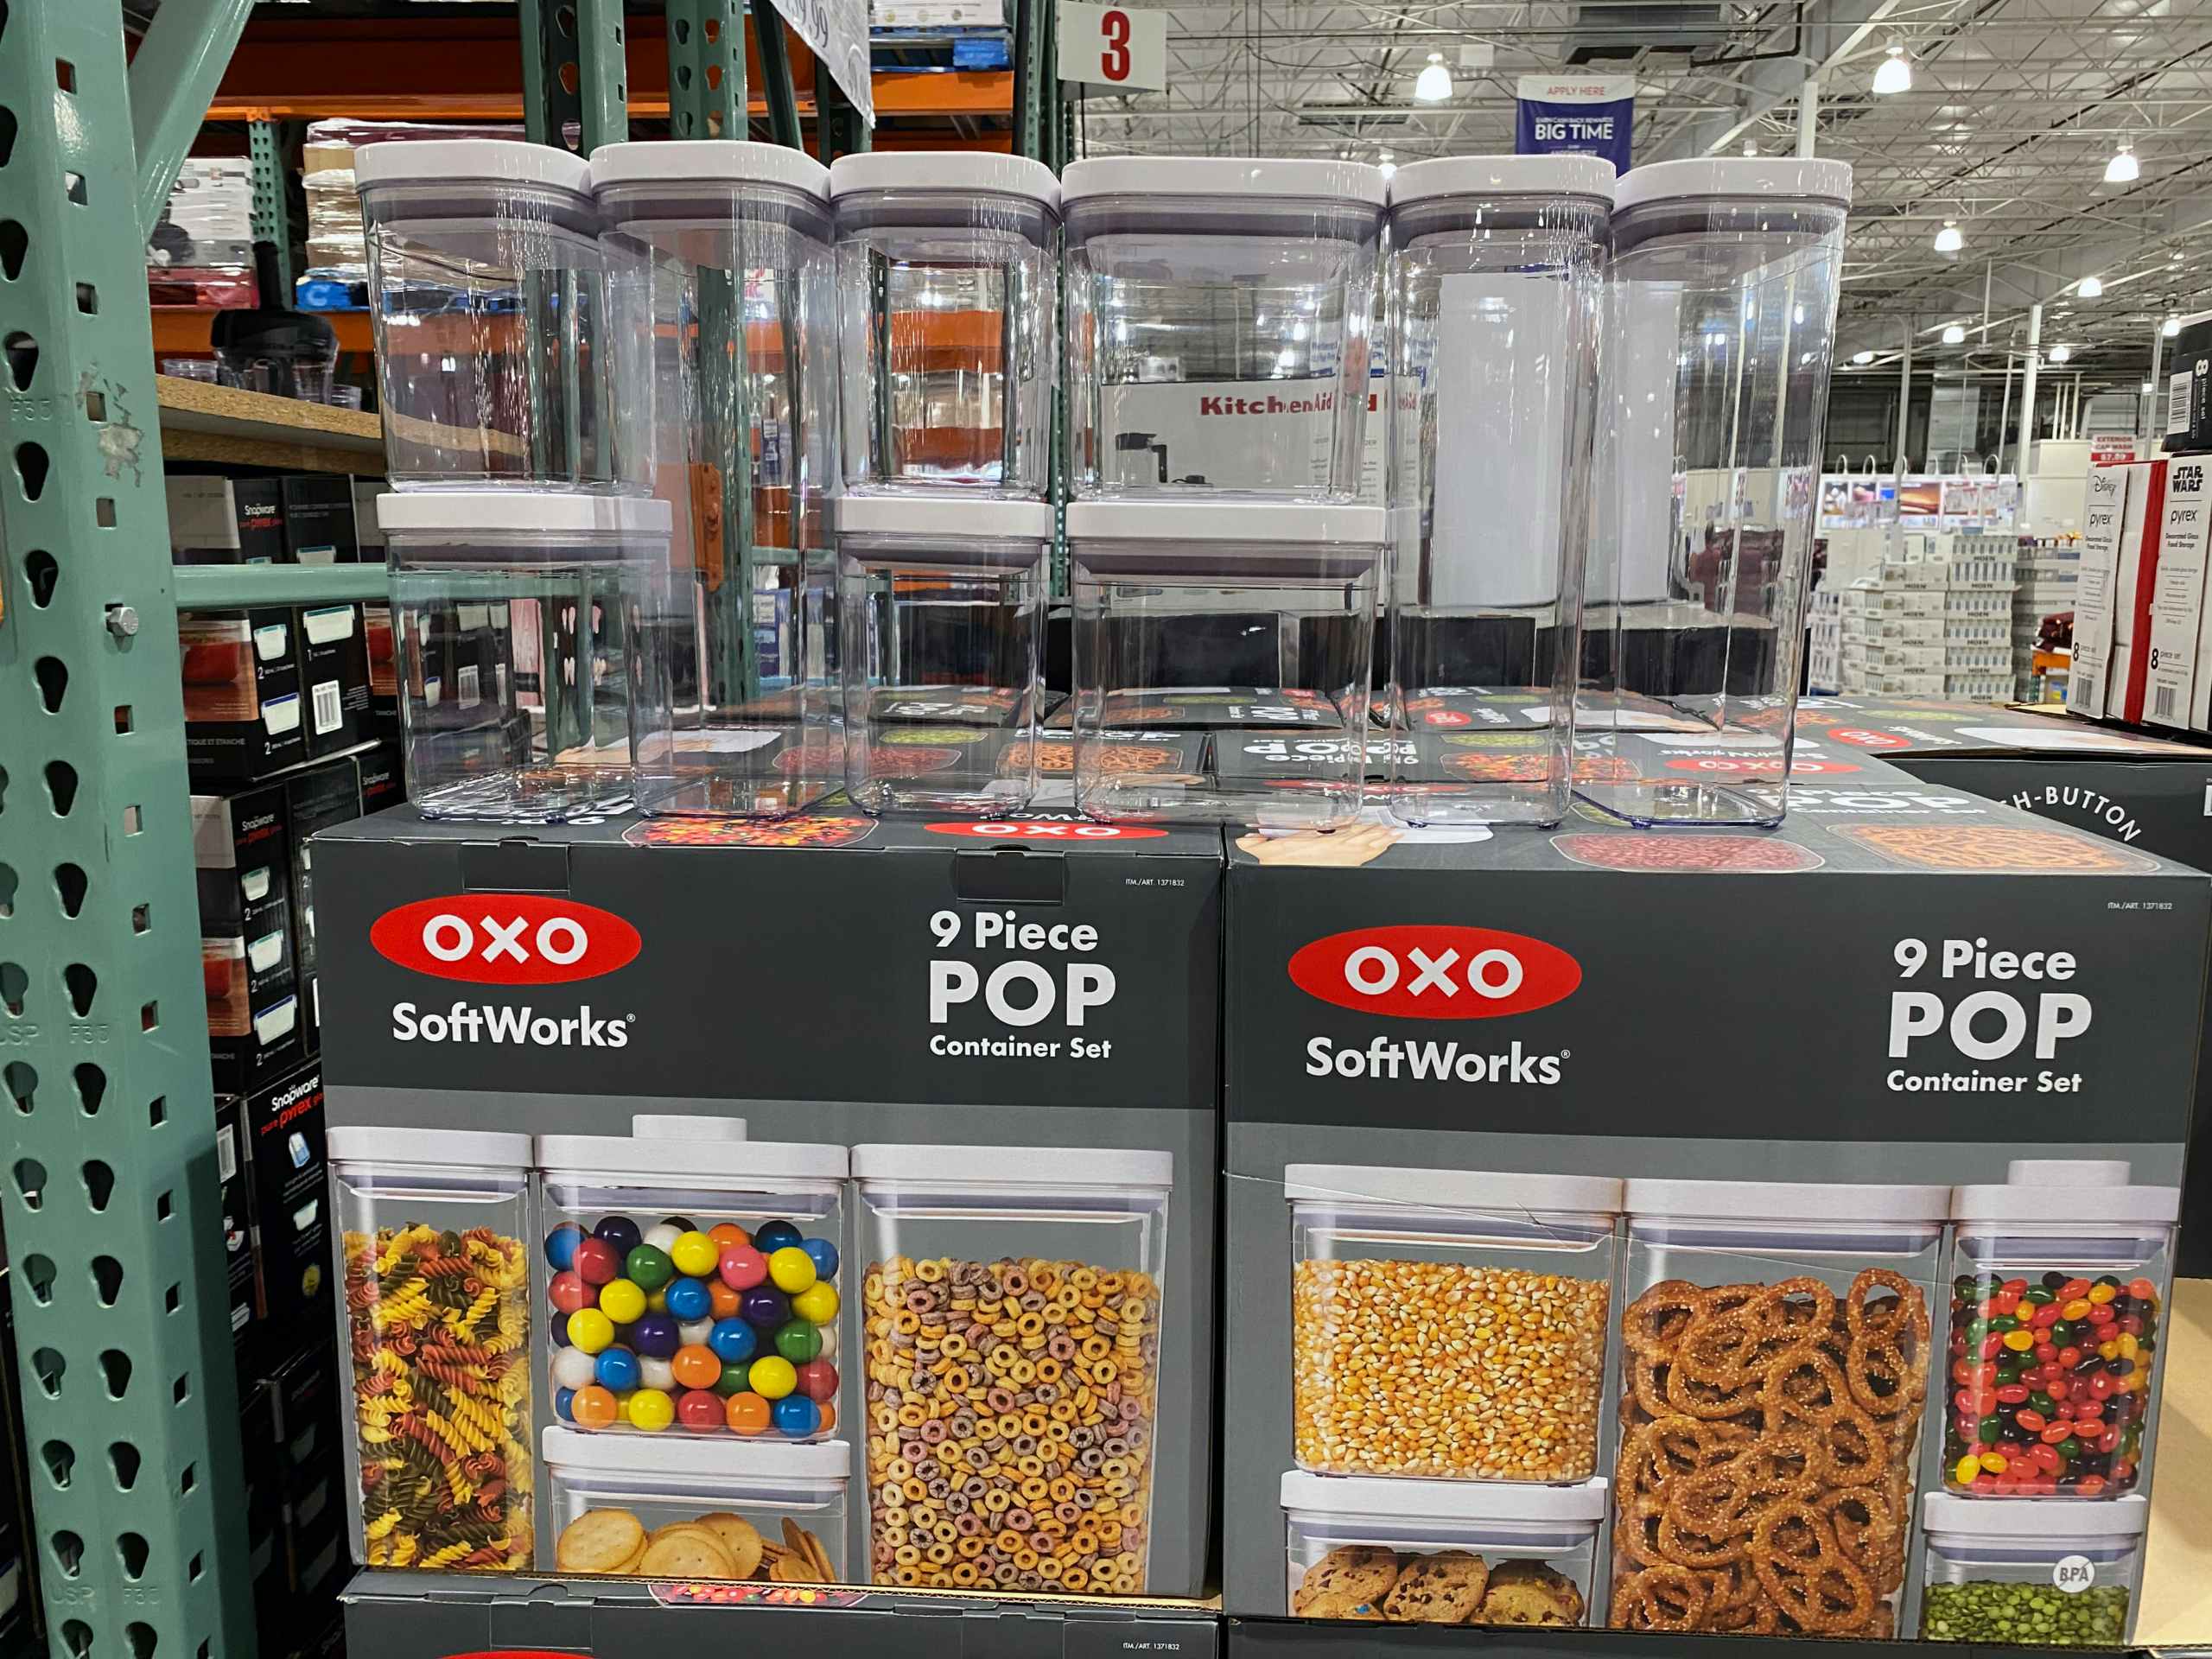 costco-oxo-pop-container-set